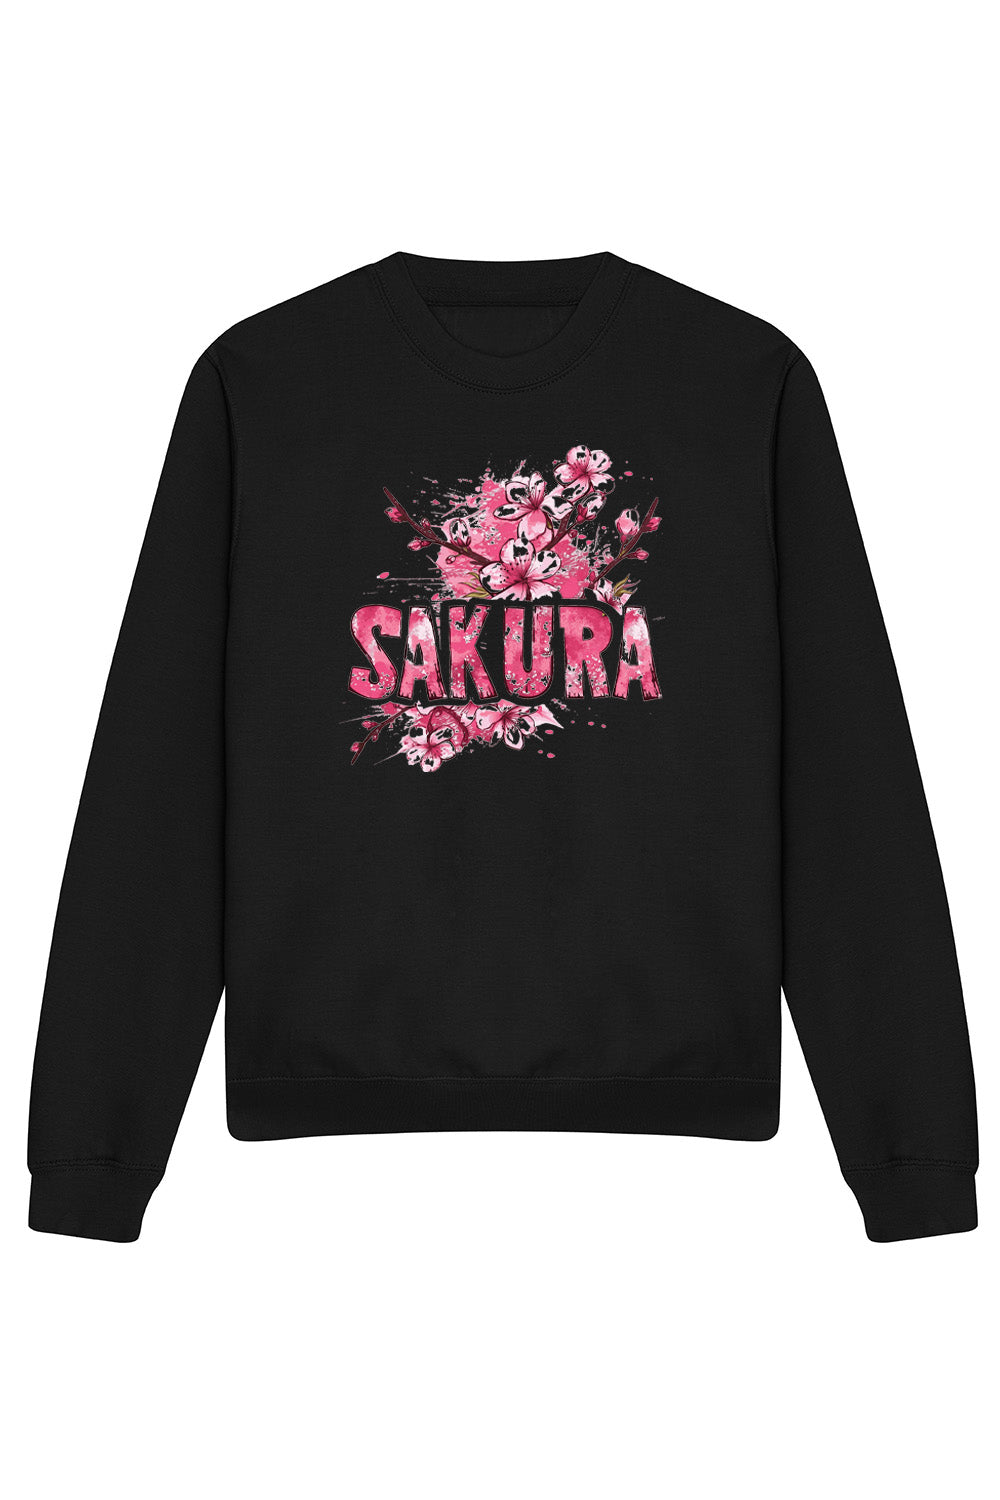 Sakura Sweatshirt In Black (Custom Pack)